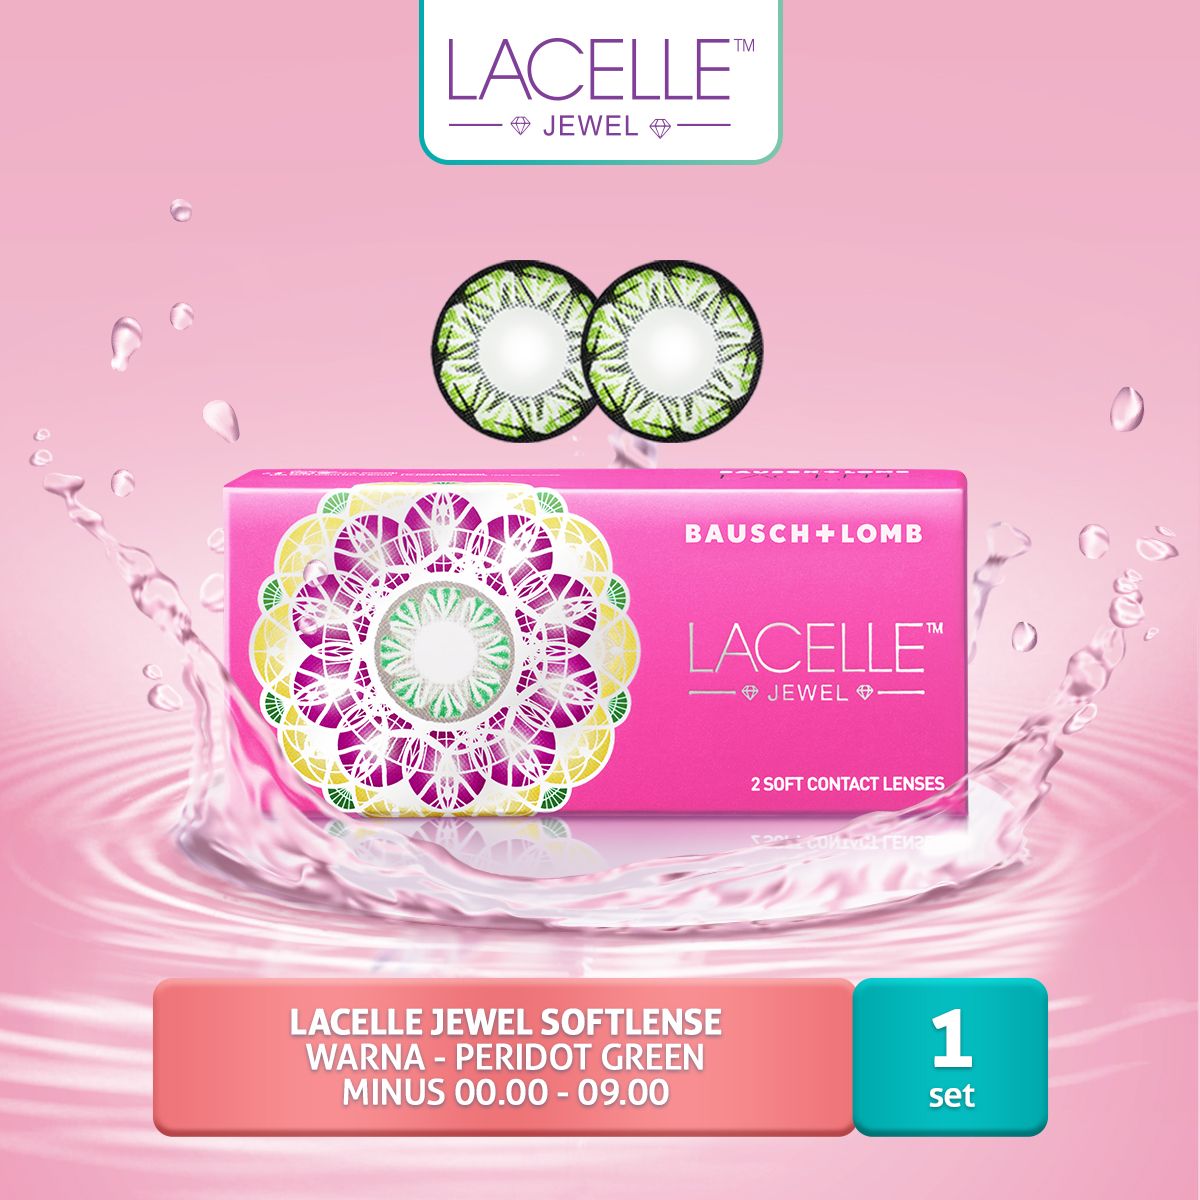 Lacelle Jewel Softlense Warna - Peridot Green -8.50 - 1